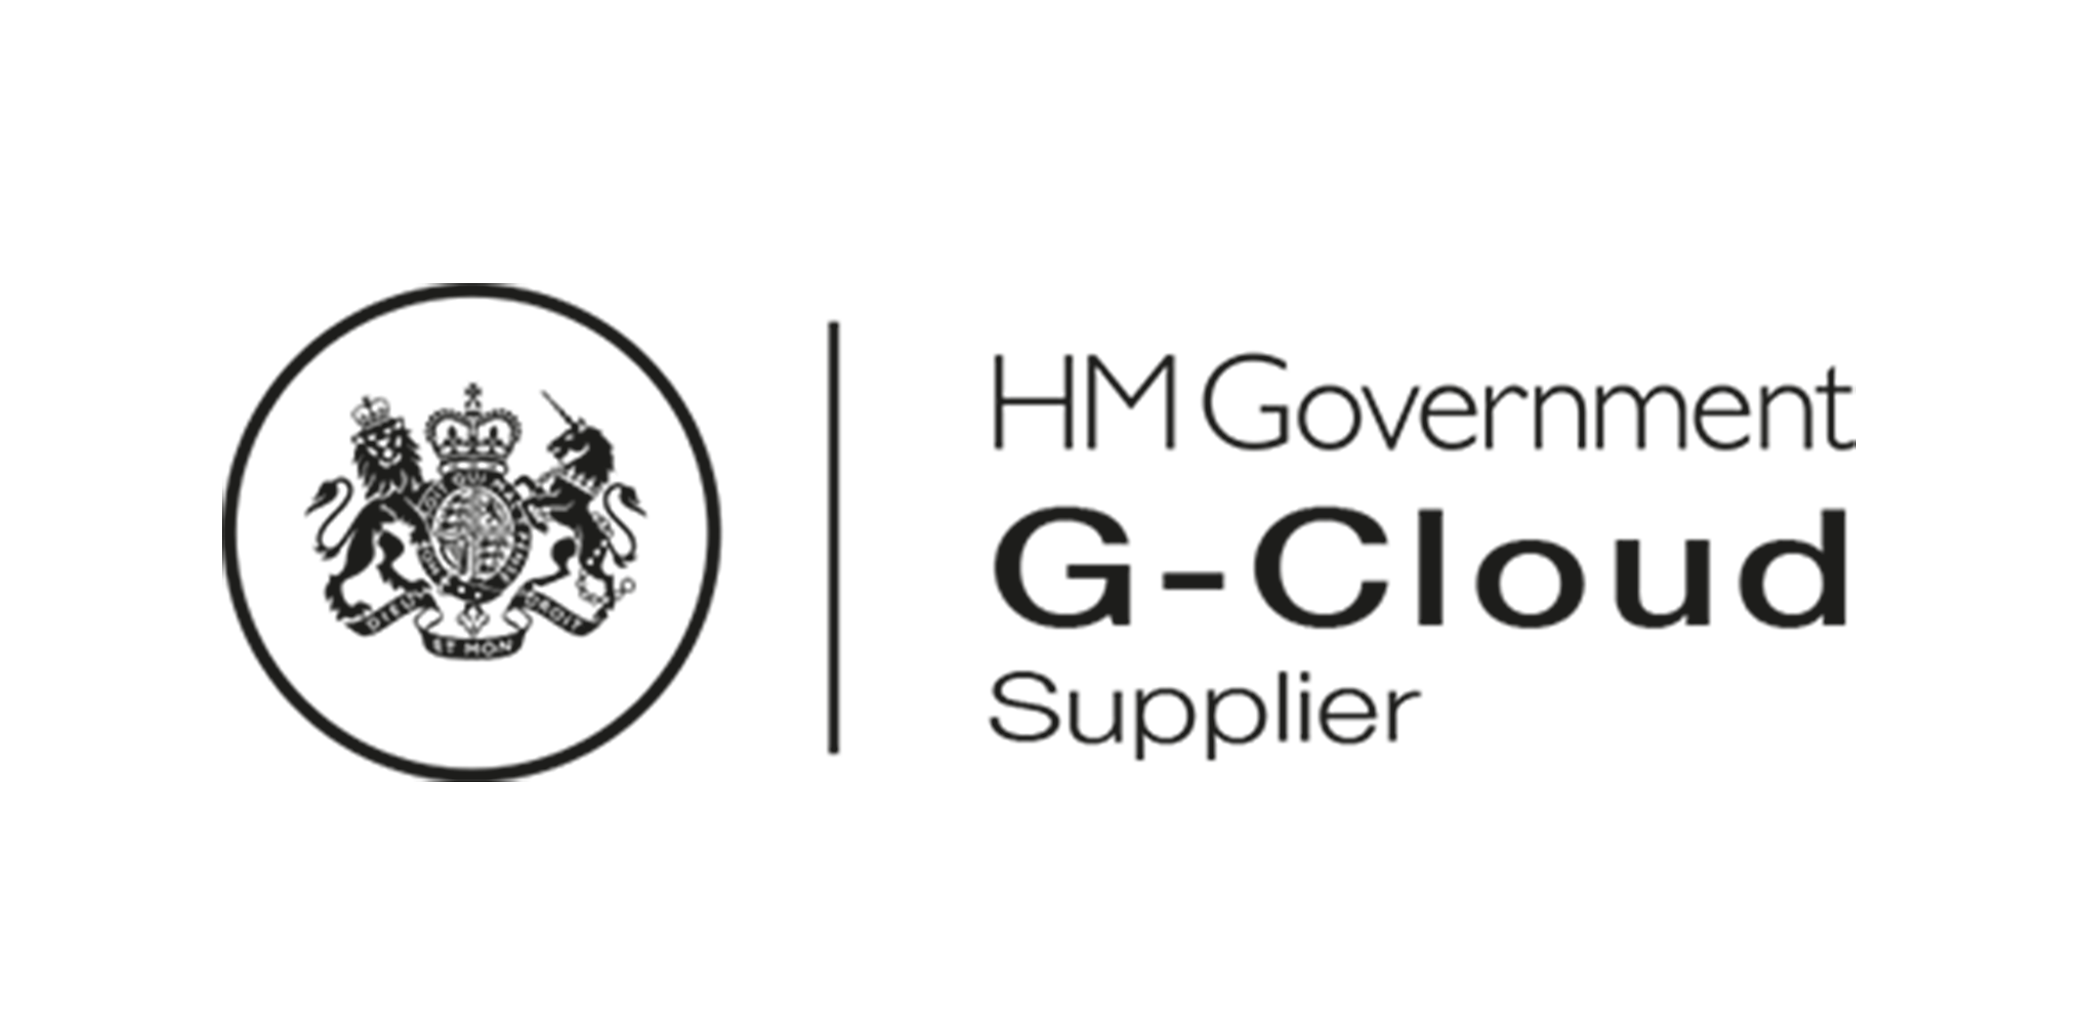 HM Government G-cloud supplier